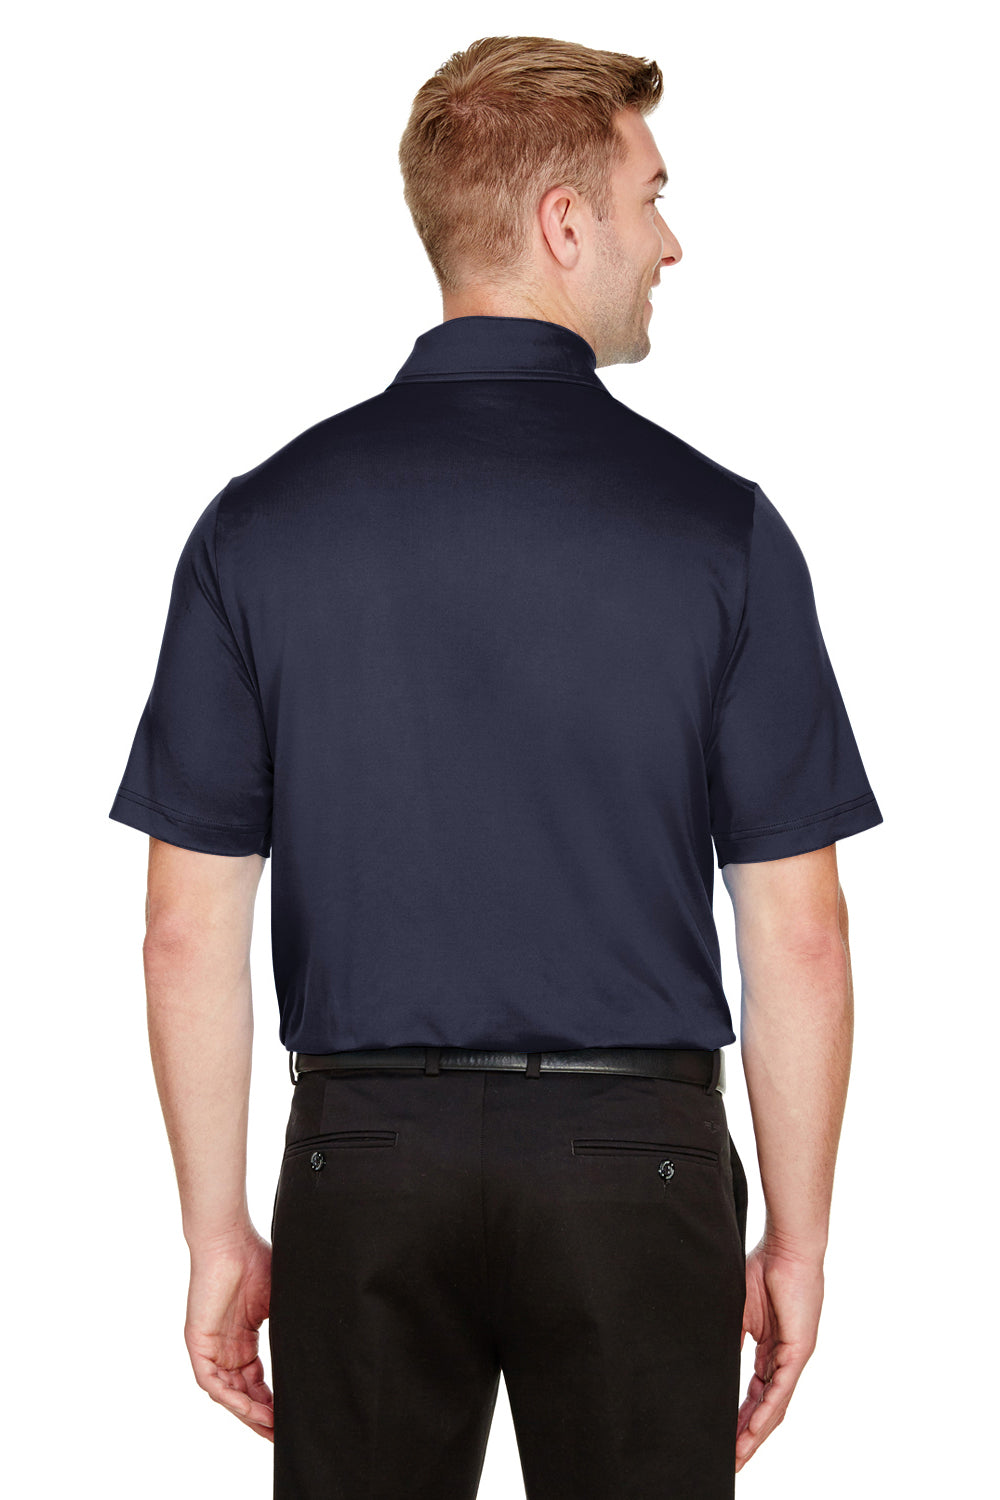 Devon & Jones DG21 Mens CrownLux Range Flex Performance Moisture Wicking Short Sleeve Polo Shirt Navy Blue Back